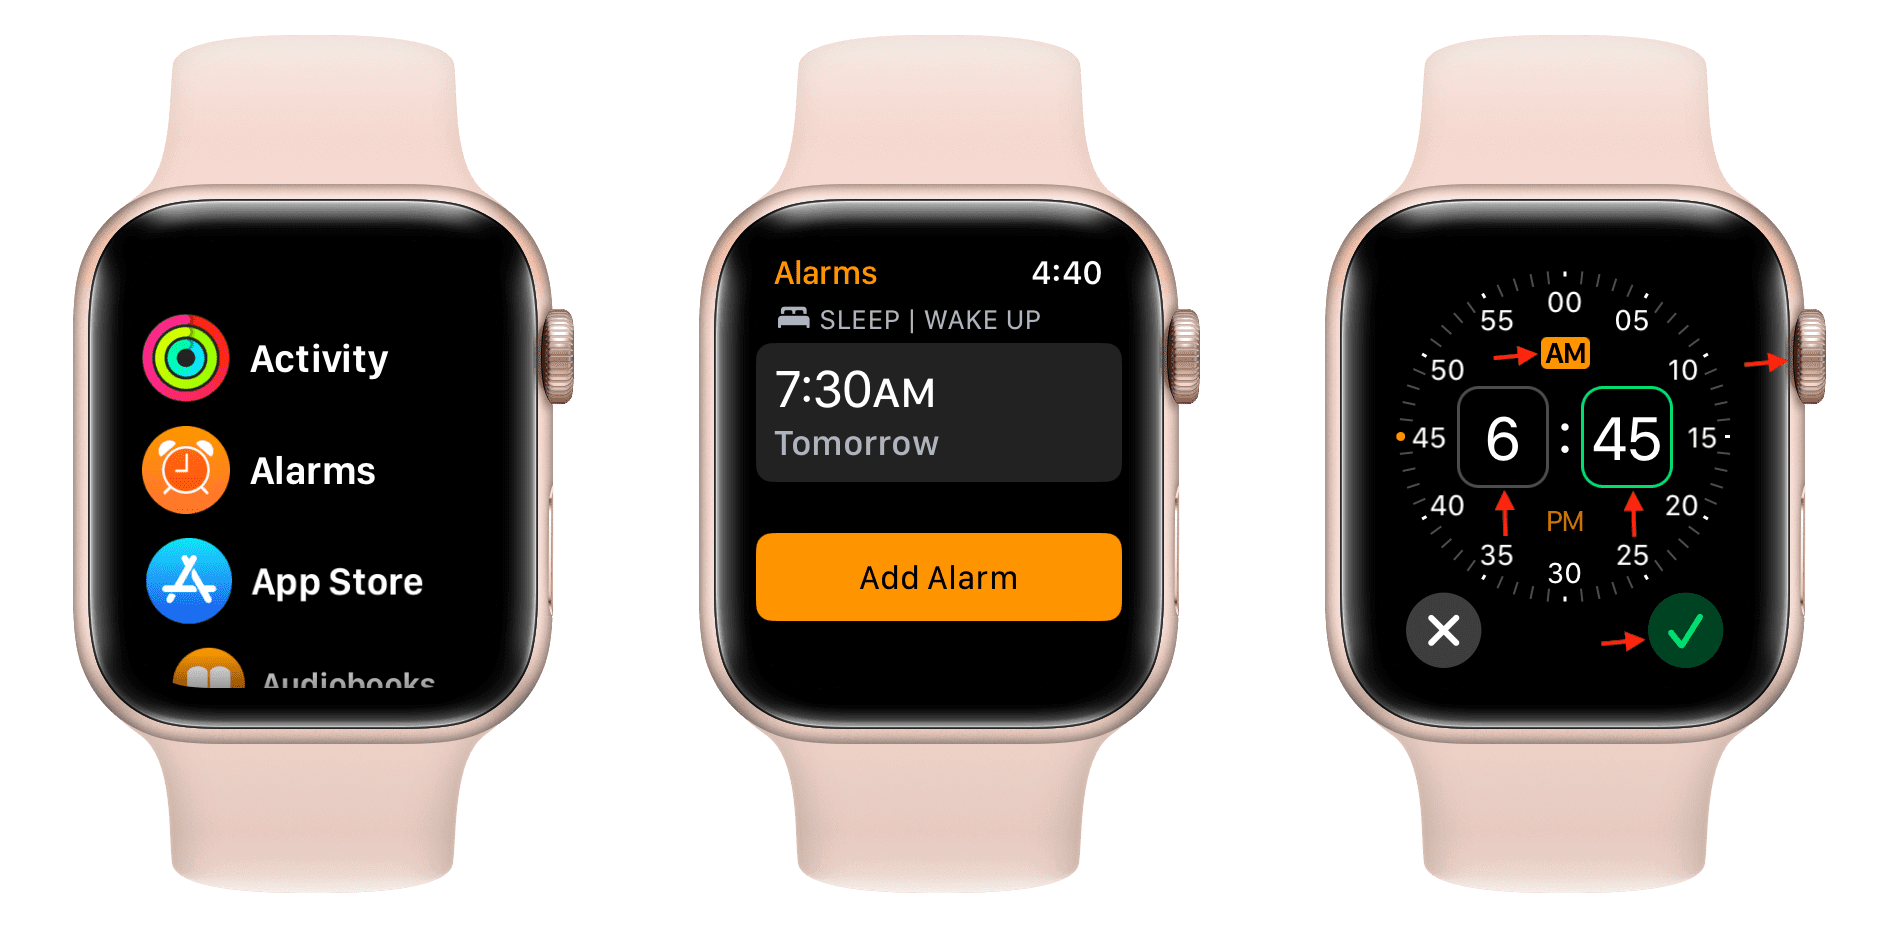 Add alarm on Apple Watch using Alarms app